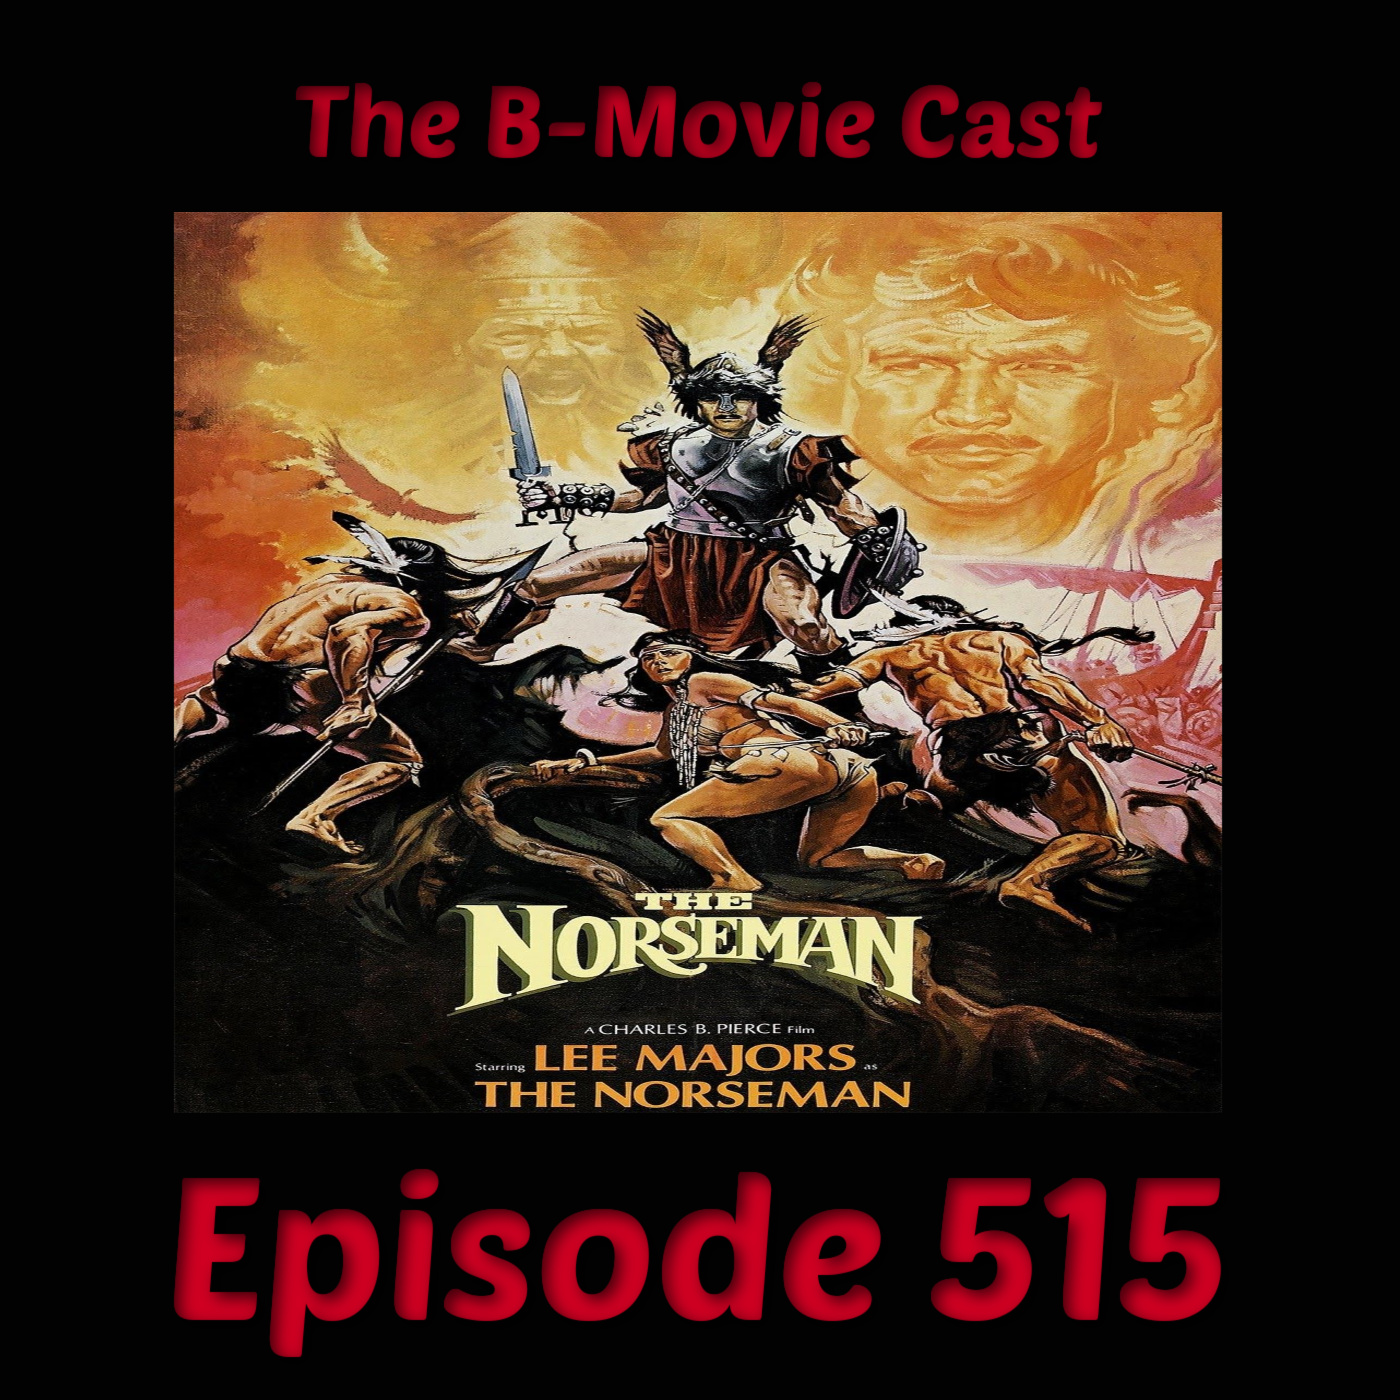 Episode 515: The Norseman